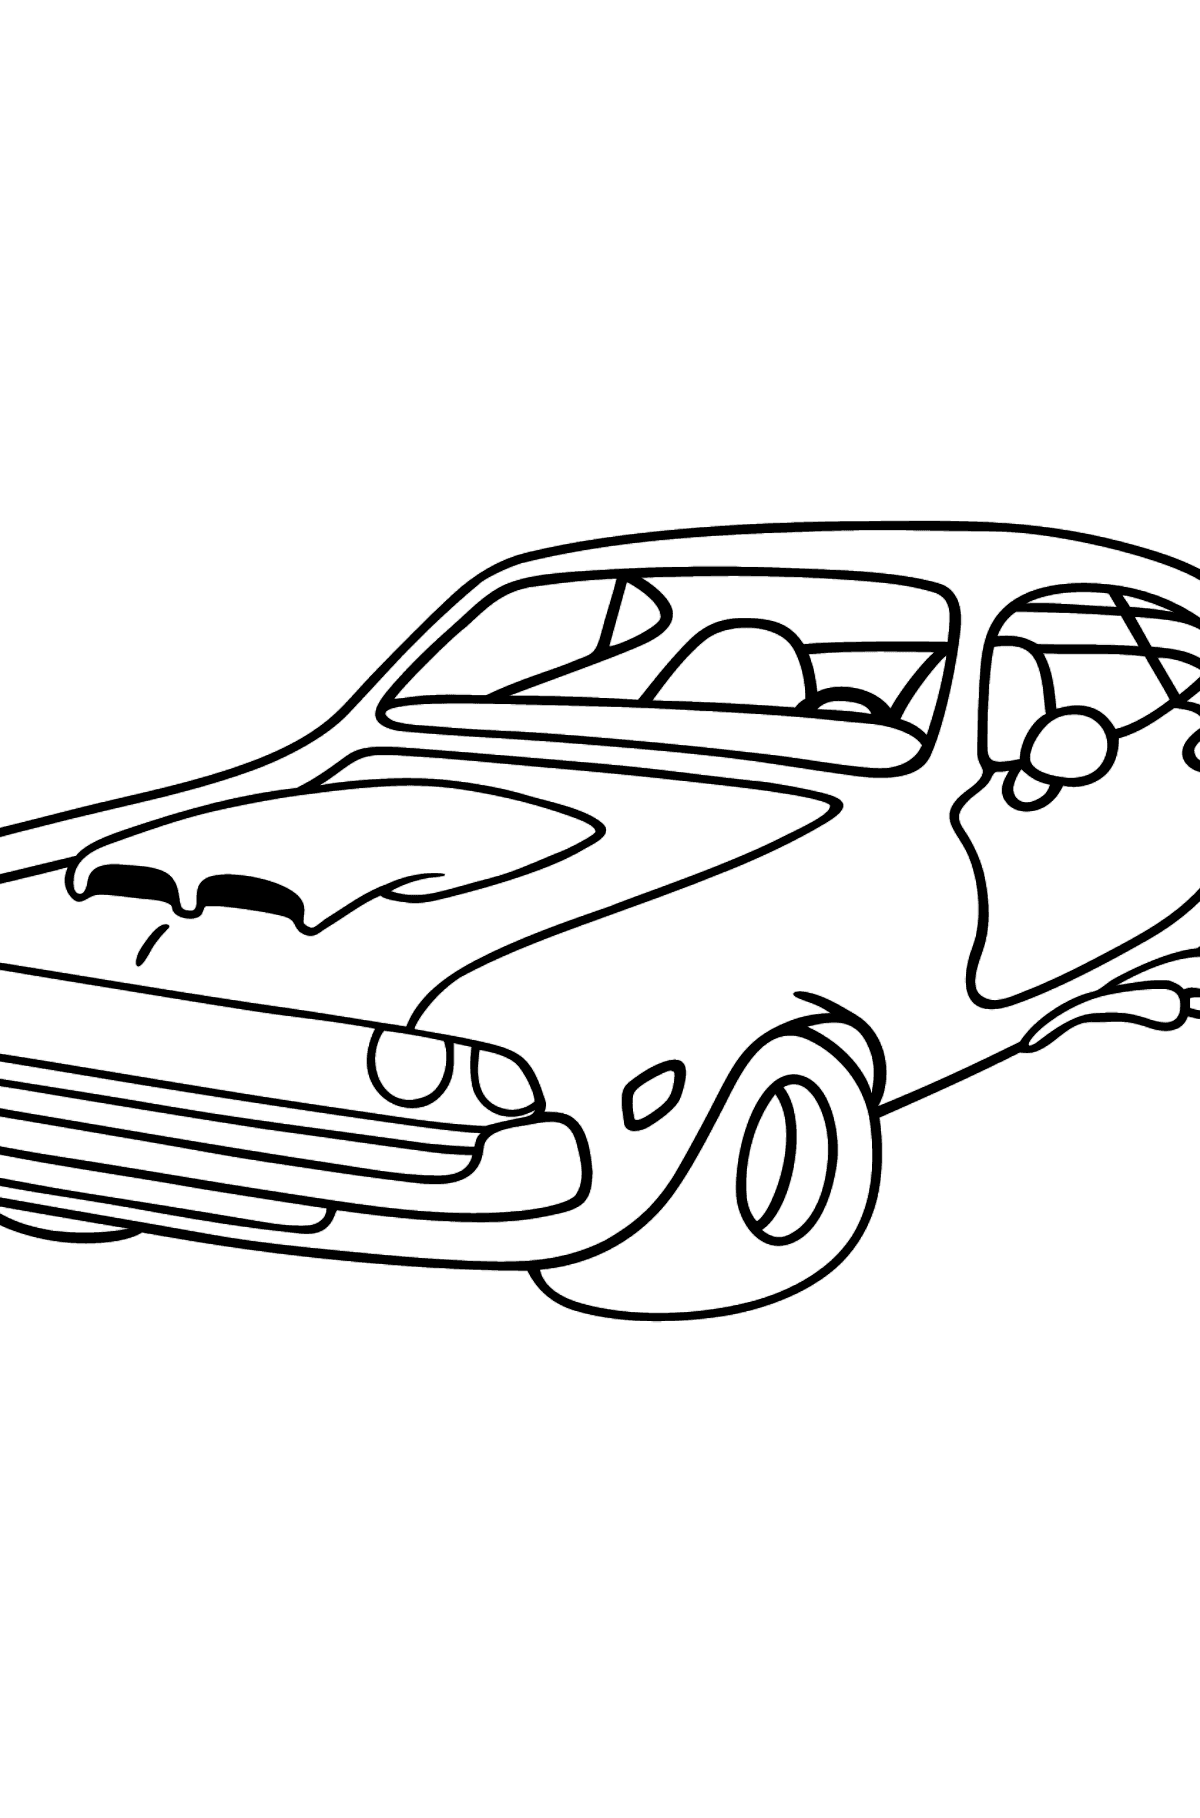 Dibujo de Coche deportivo Chevrolet-Chevy para colorear - Dibujos para Colorear para Niños